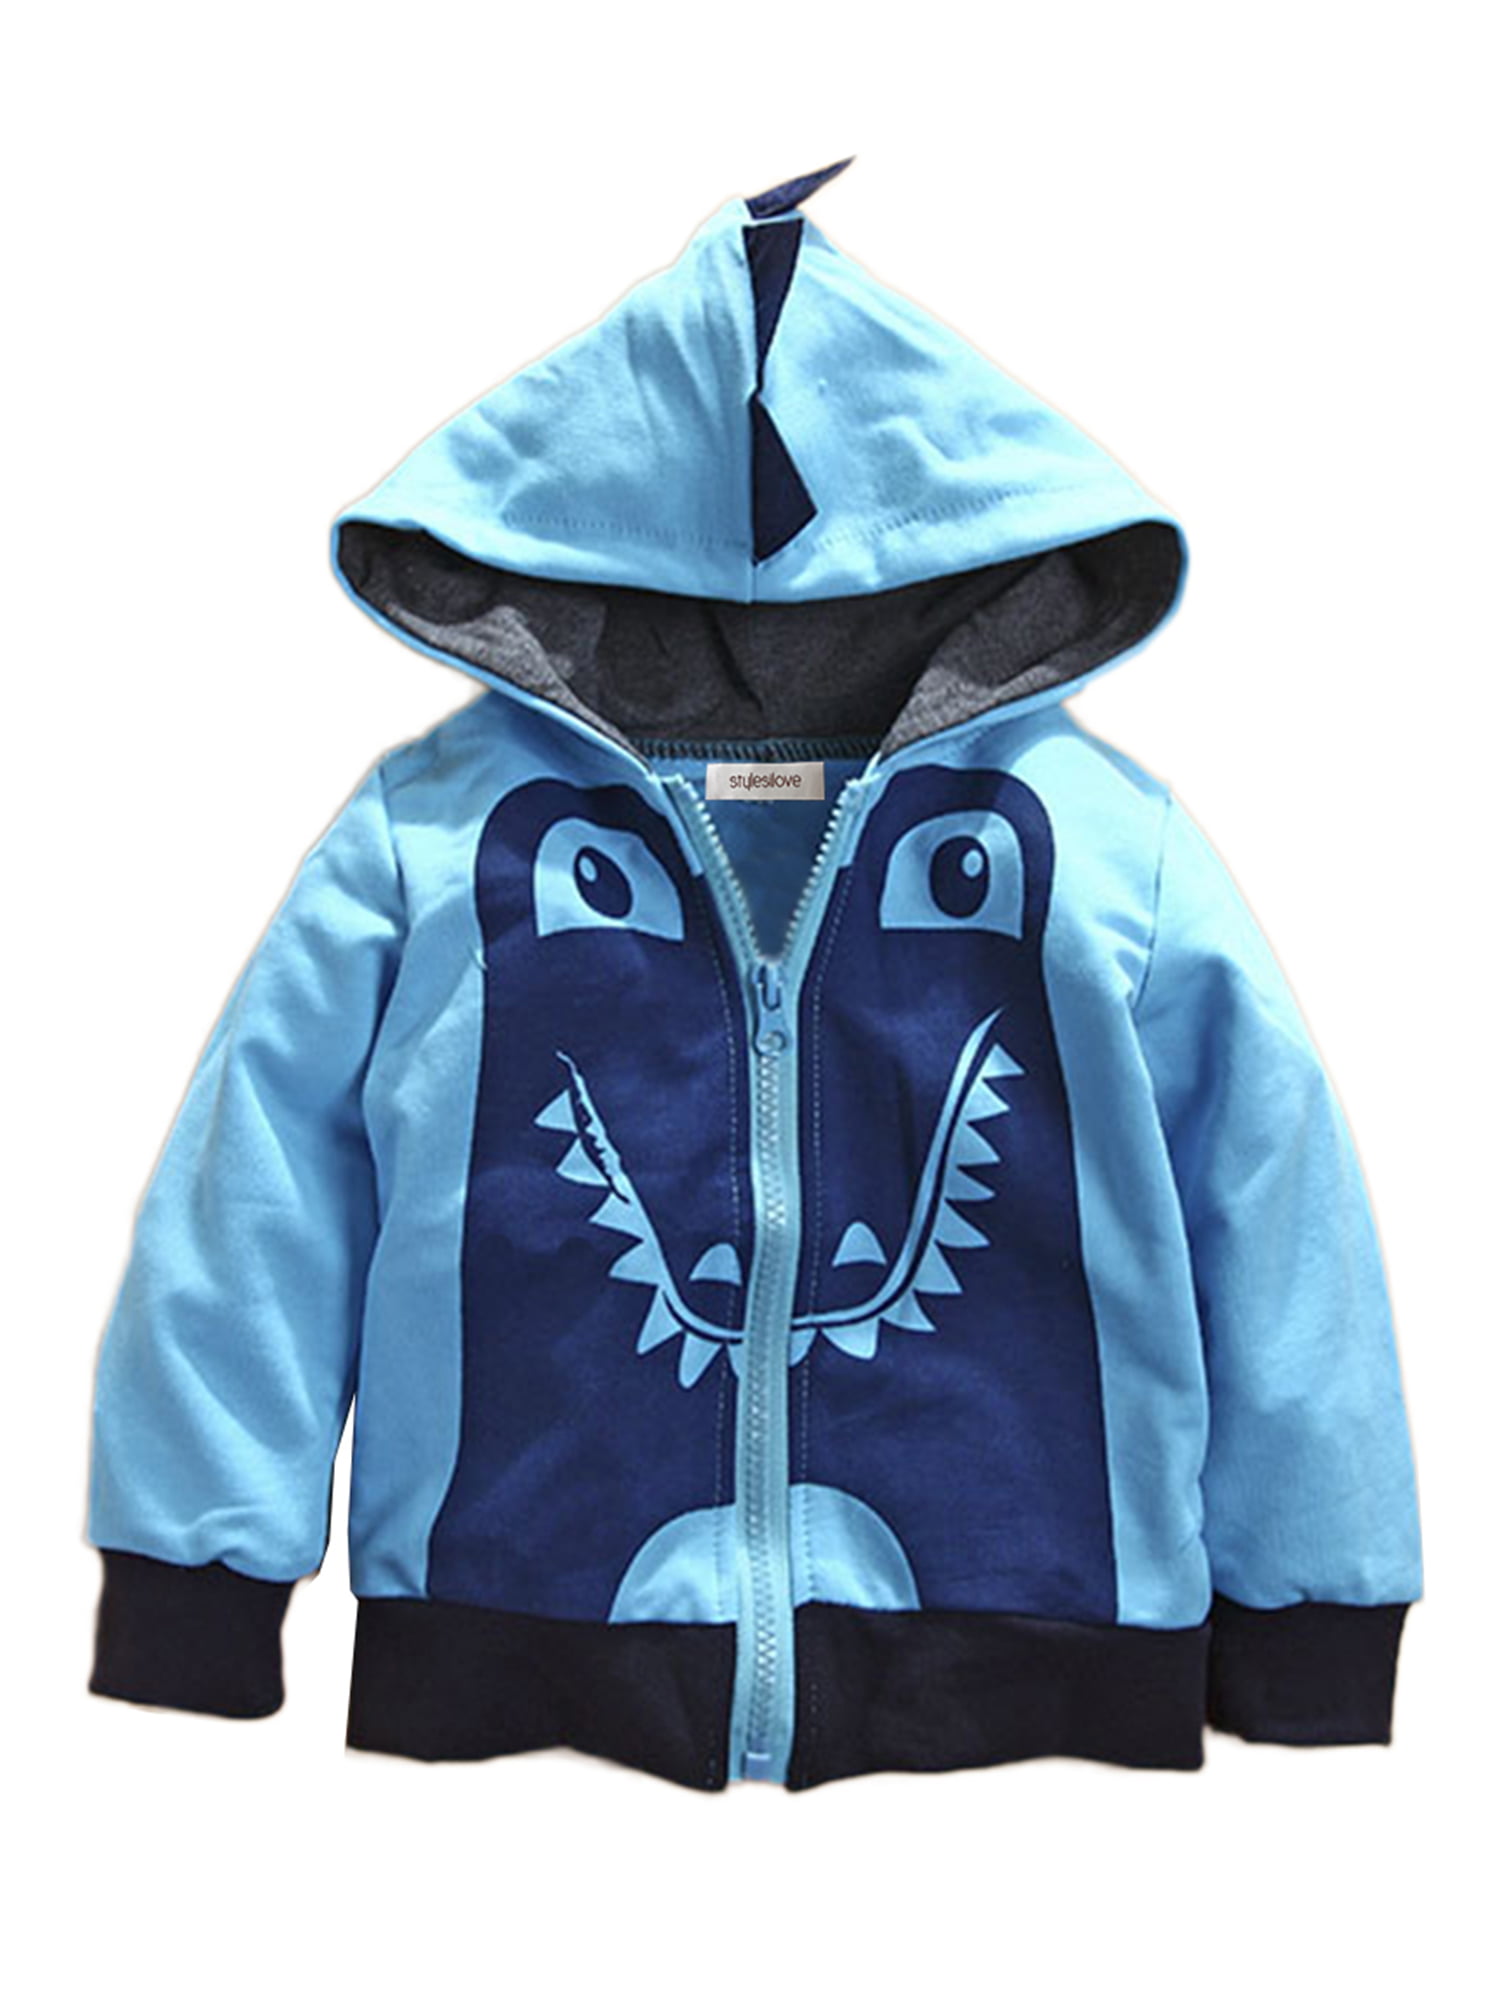 Toddler Kids Boys Hoodie Coat Jackets Dinosaur Sweatshirt Zipper Outwear Clothes 